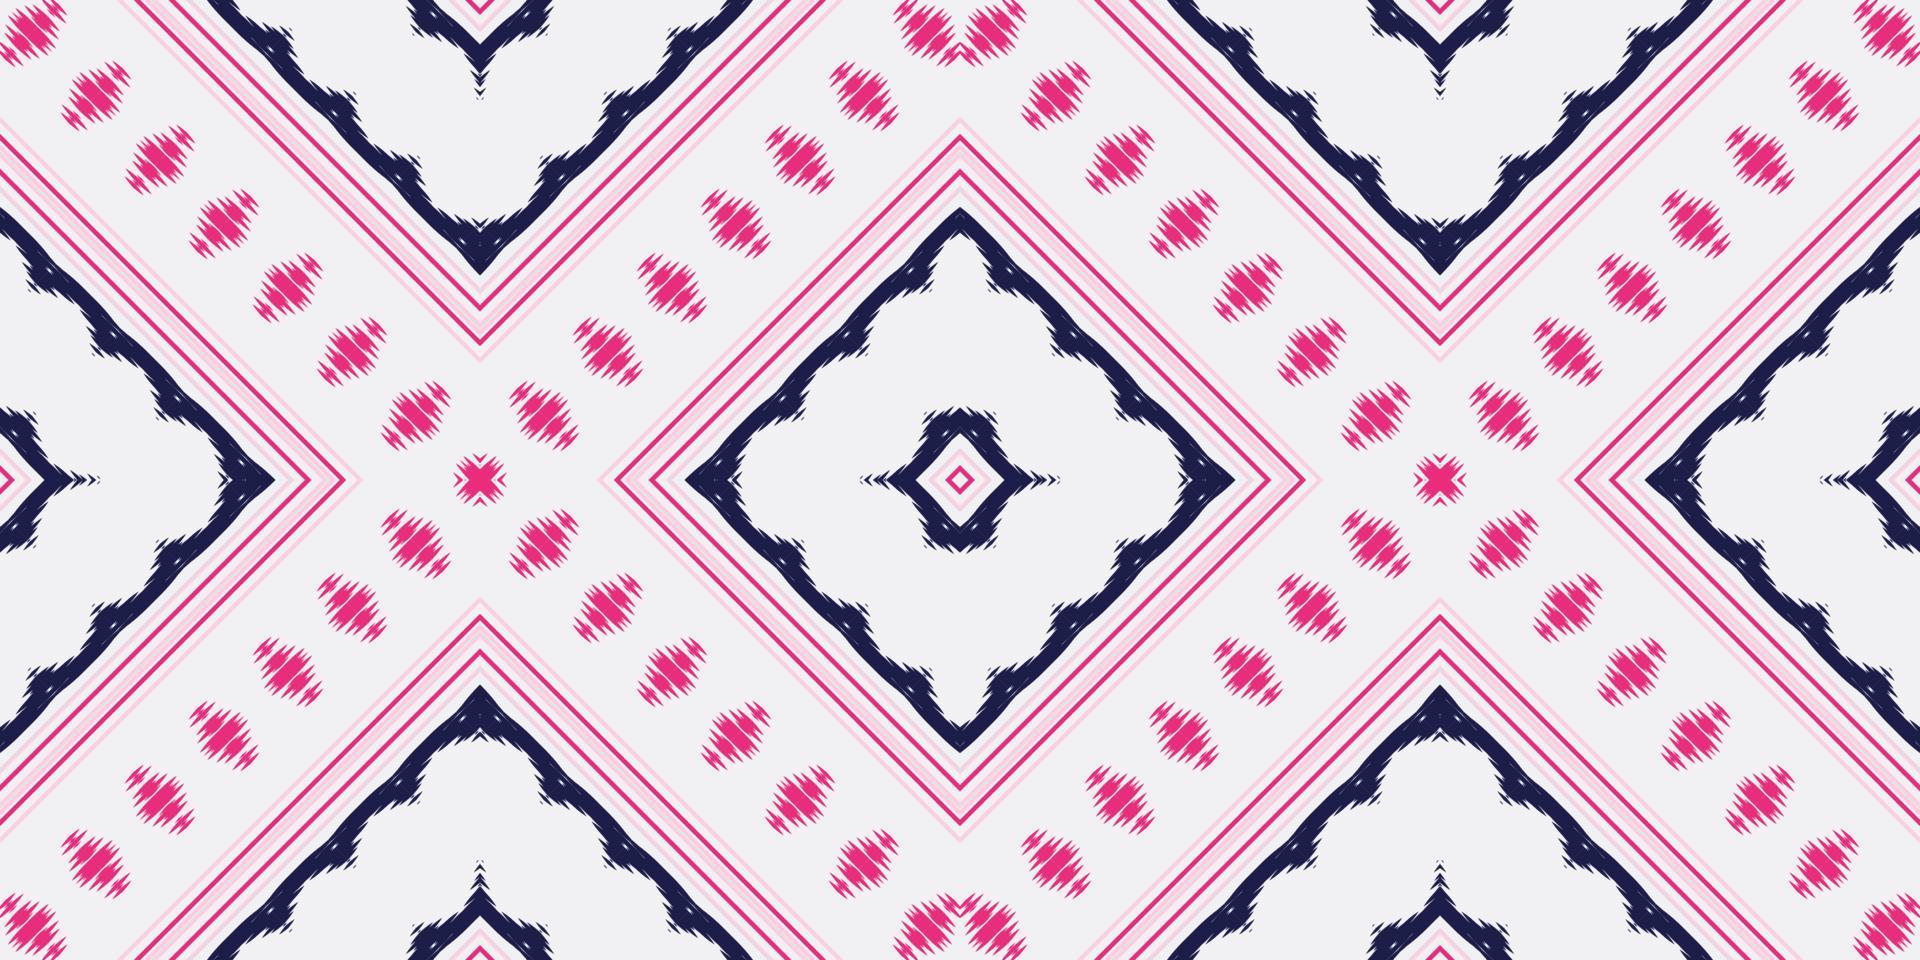 tela ikkat o ikat batik textil patrón sin costuras diseño vectorial digital para imprimir saree kurti borde de tela símbolos de pincel muestras ropa de fiesta vector